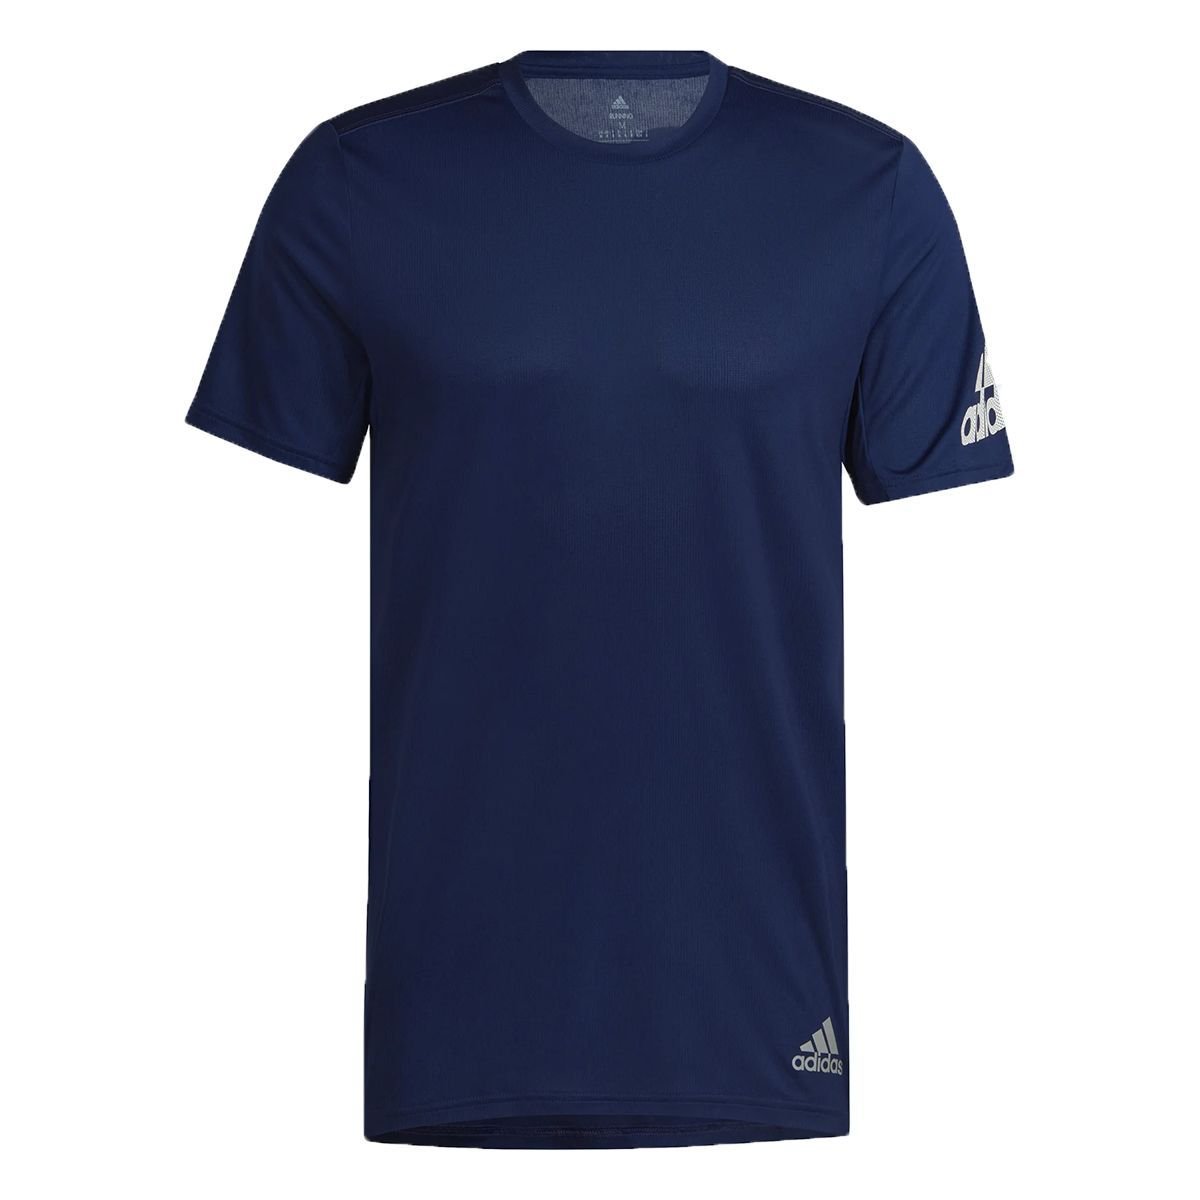 Camiseta Run It - Preto adidas